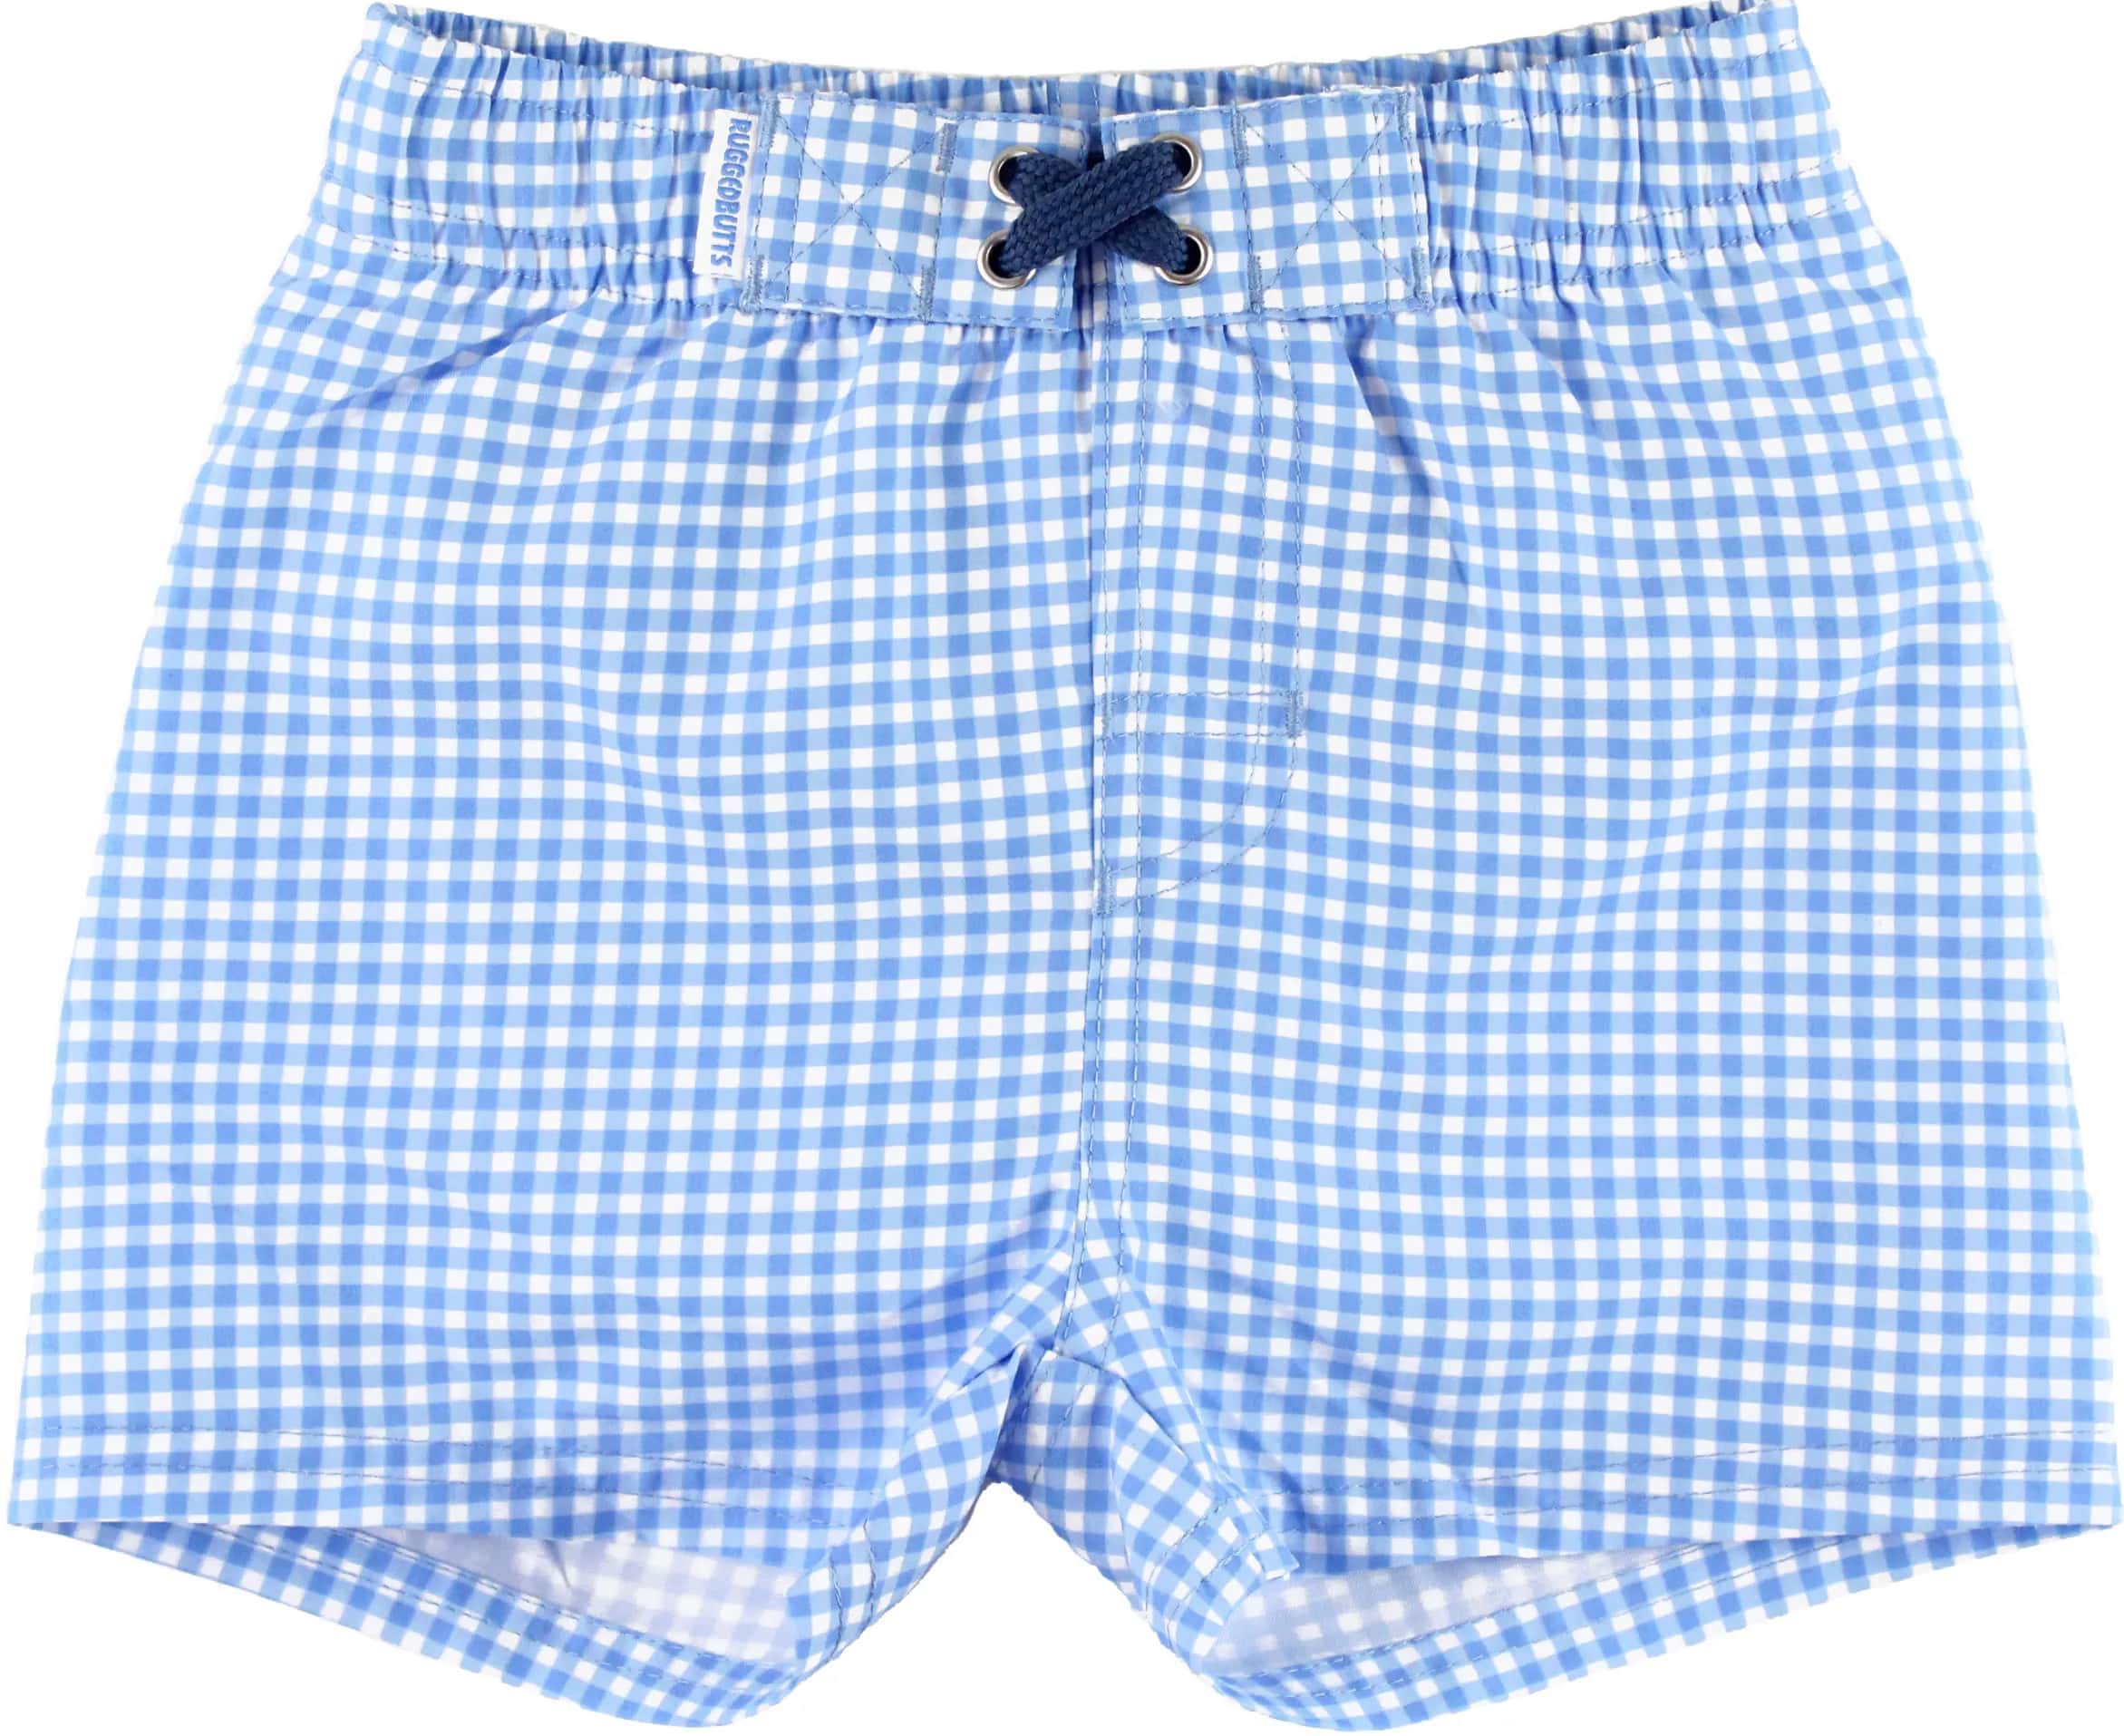 Blue and white checkered swim trunks 